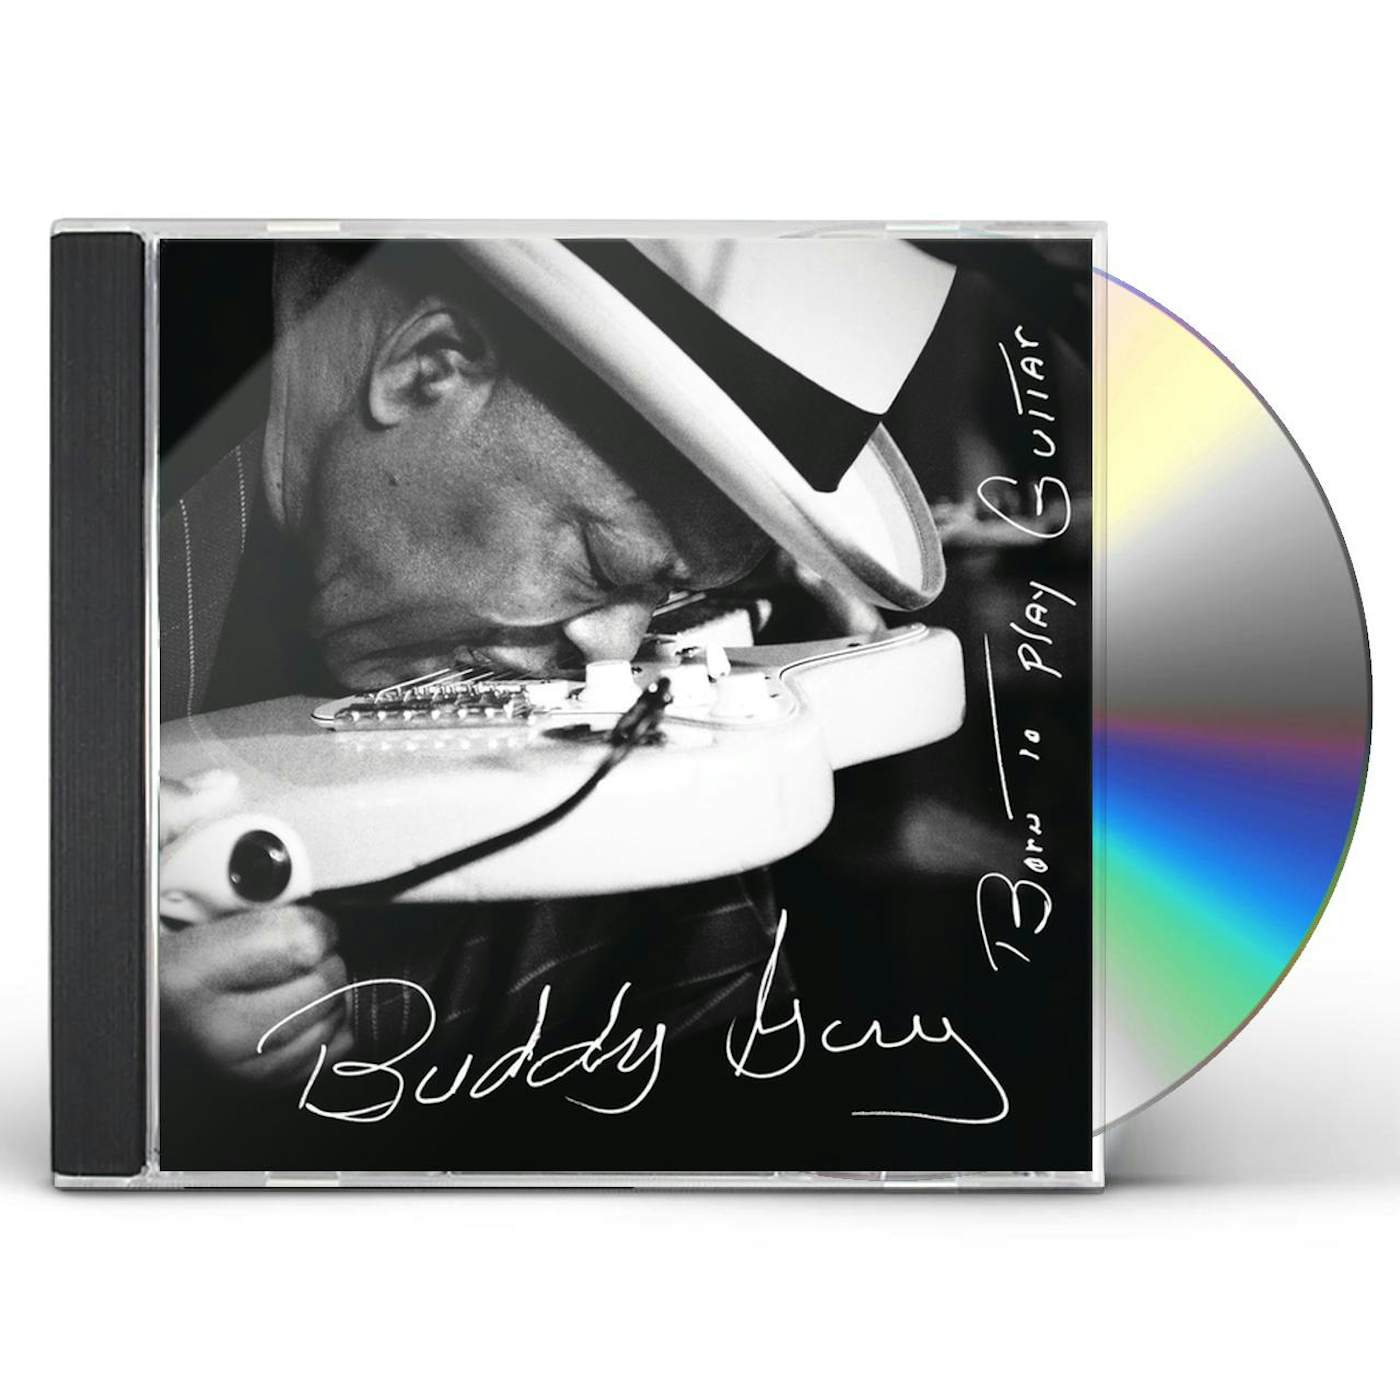 Buddy Guy BORN TO PLAY GUITAR CD